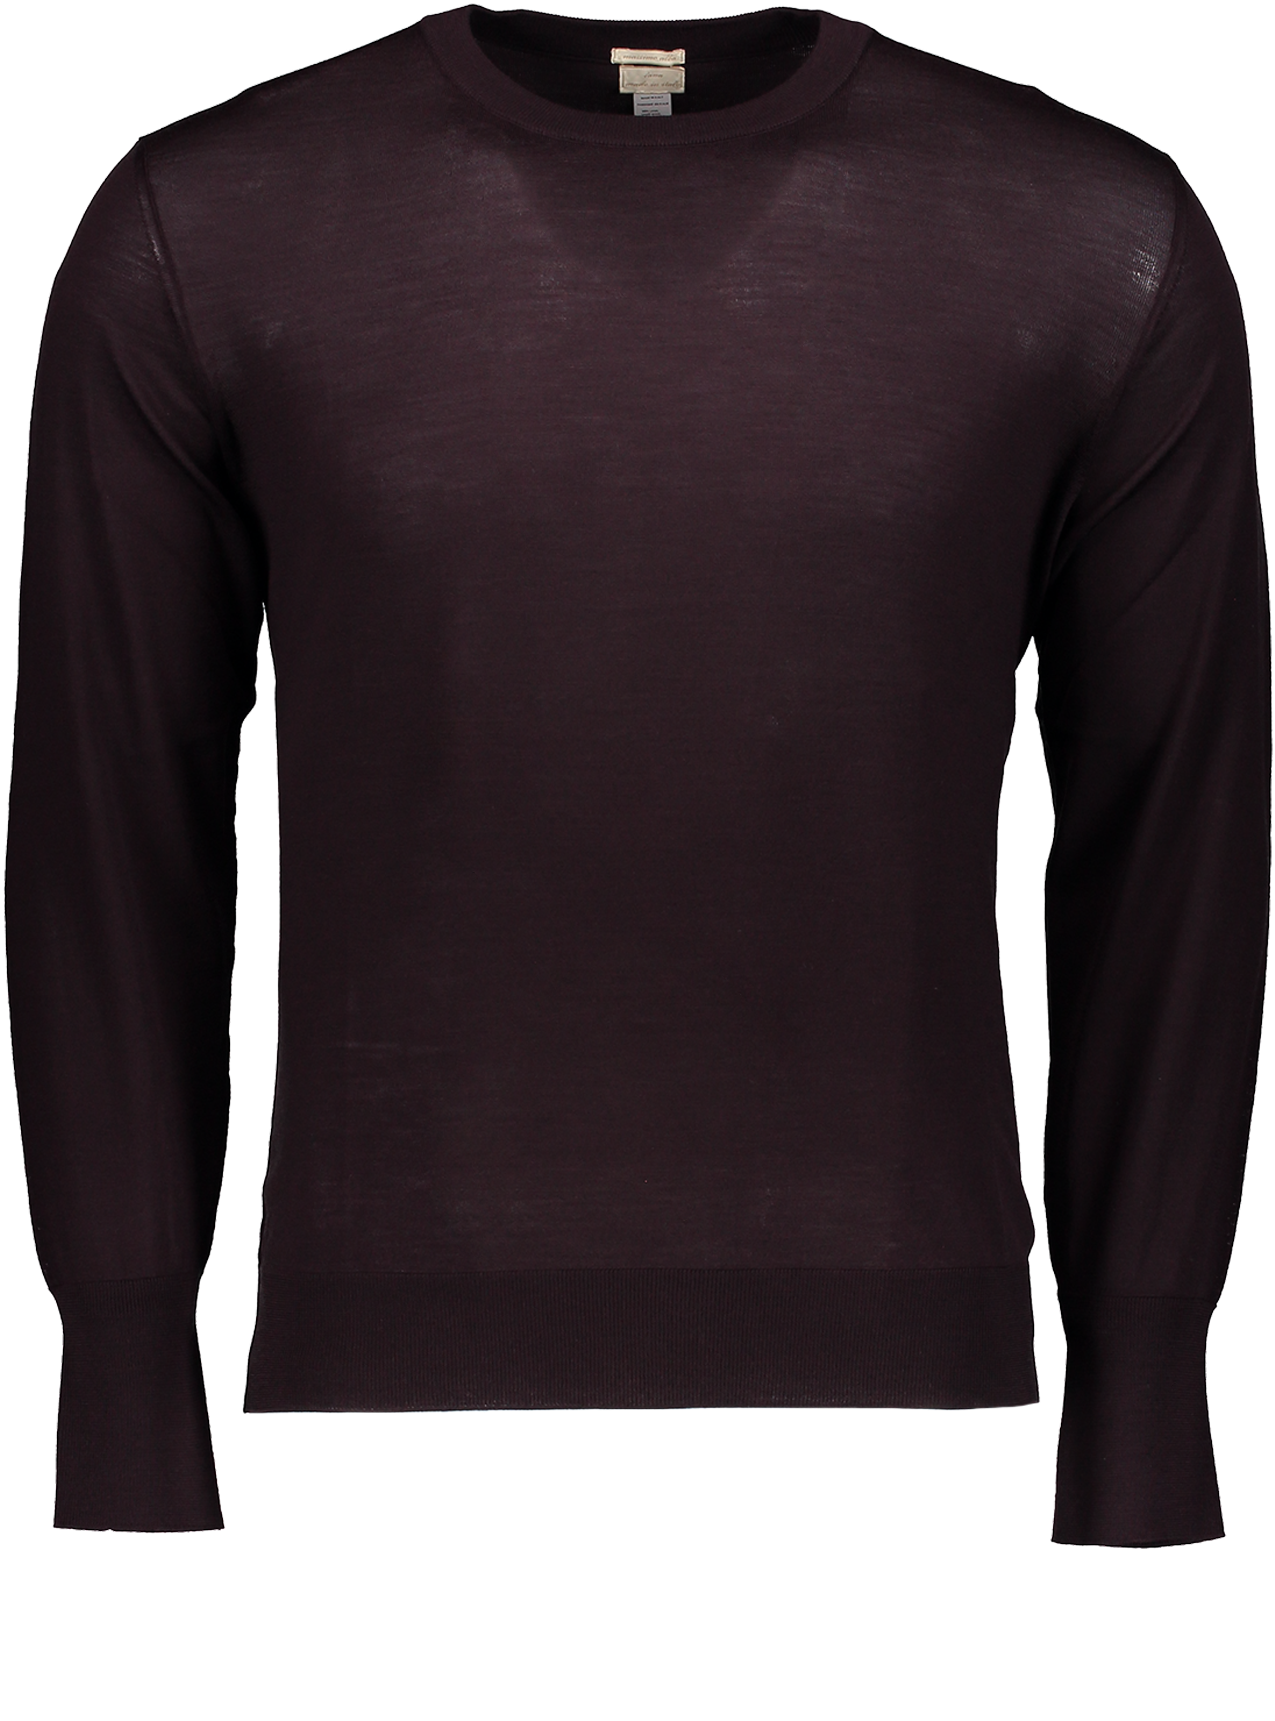 Wool Crewneck Burgundy - Sweatshirt (1280x1920), Png Download